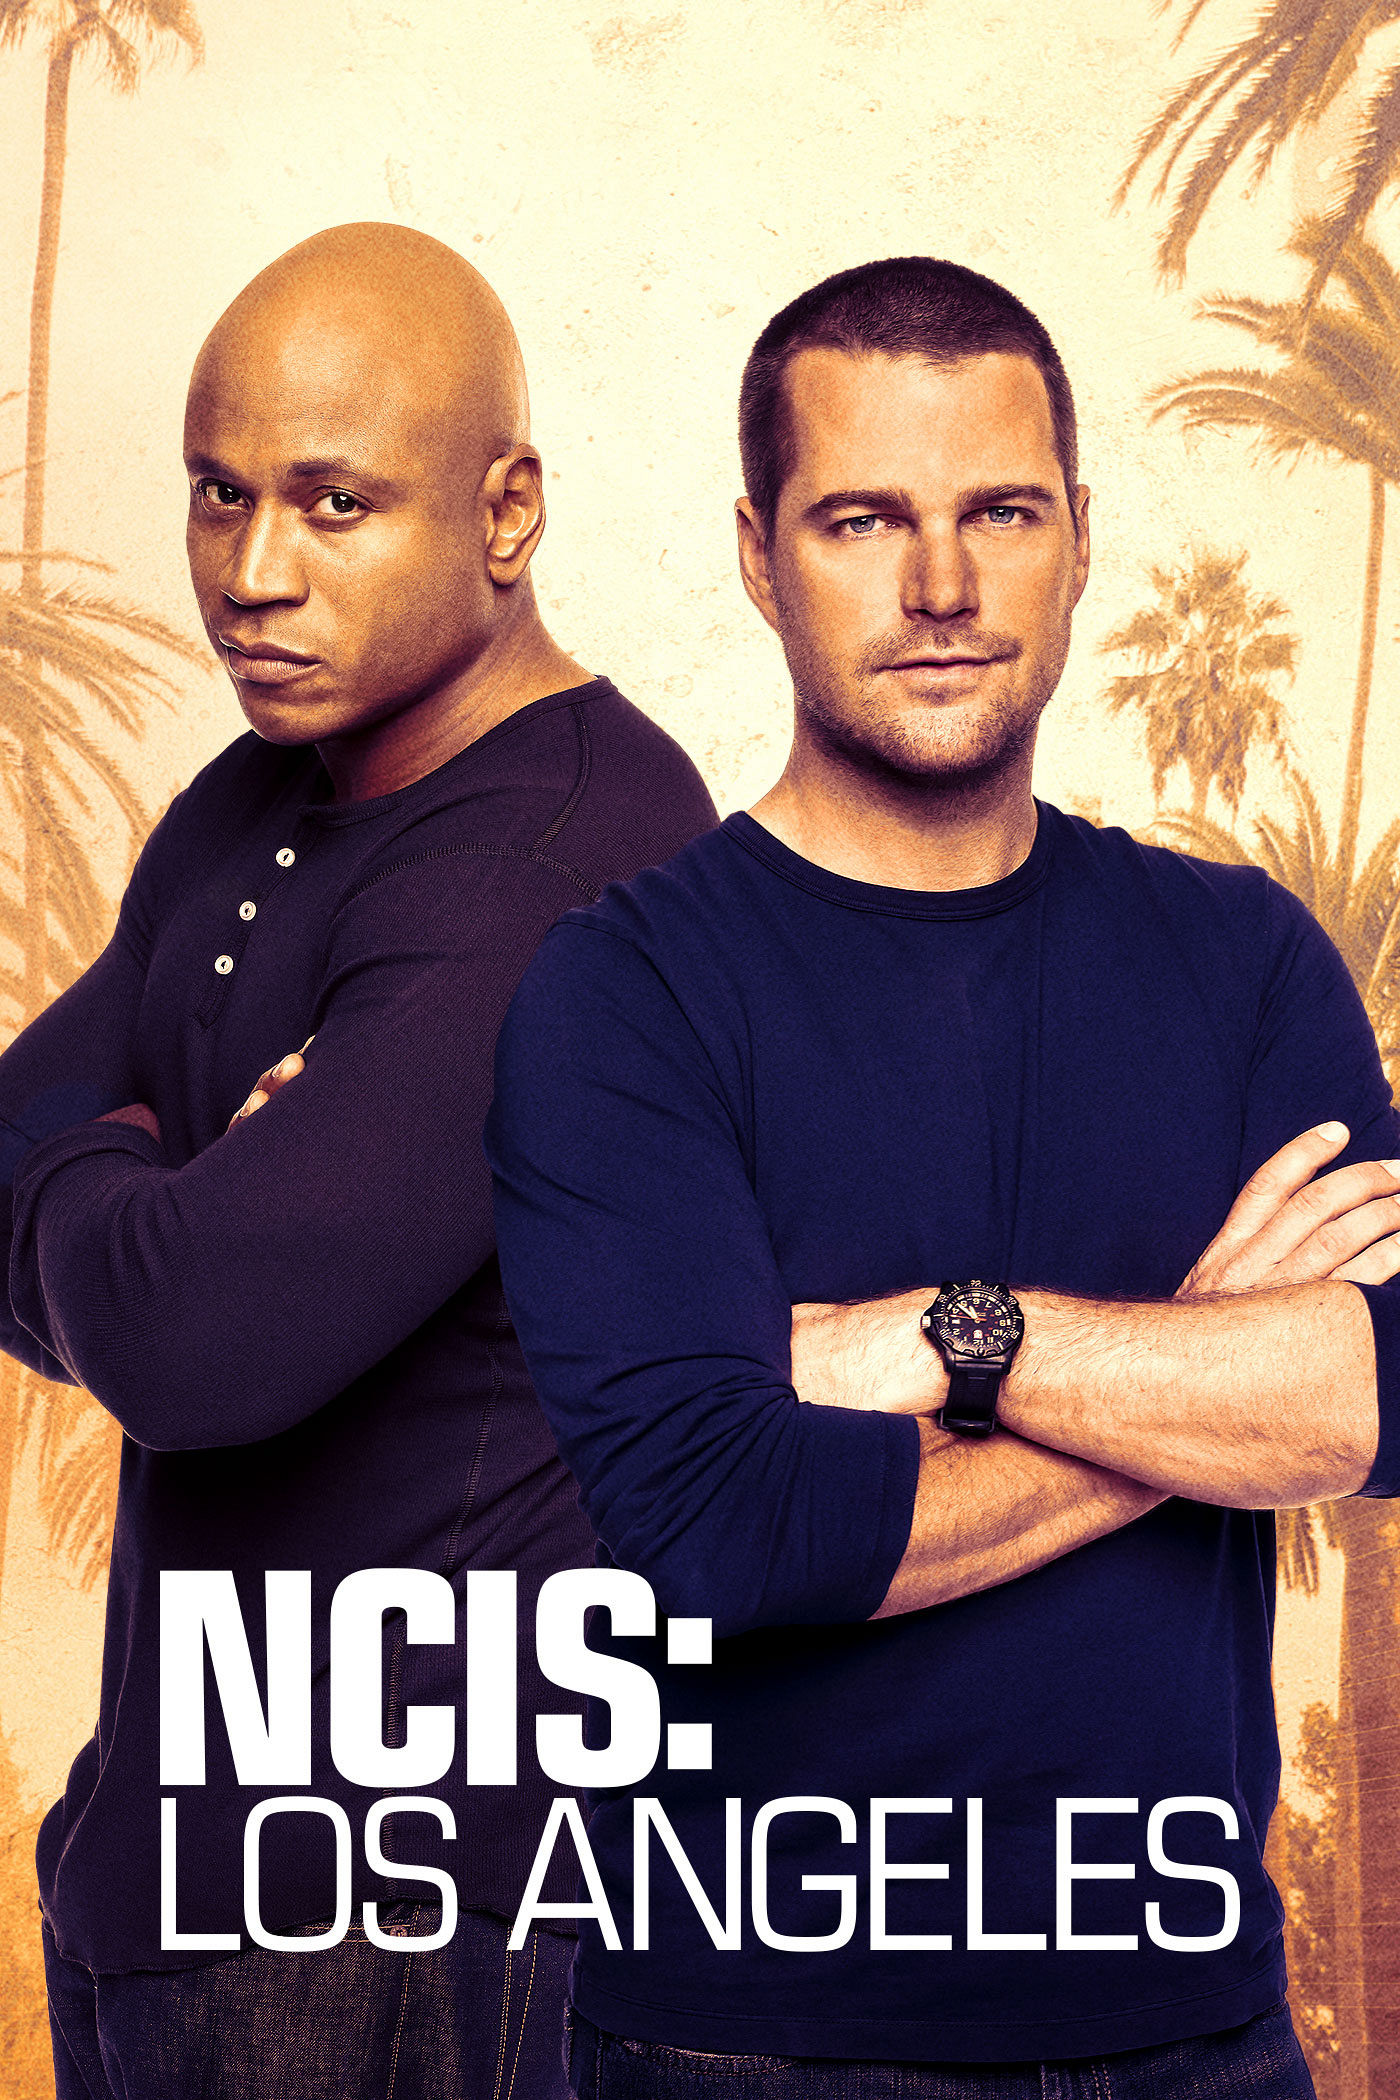 NCIS Los Angeles Next Episode